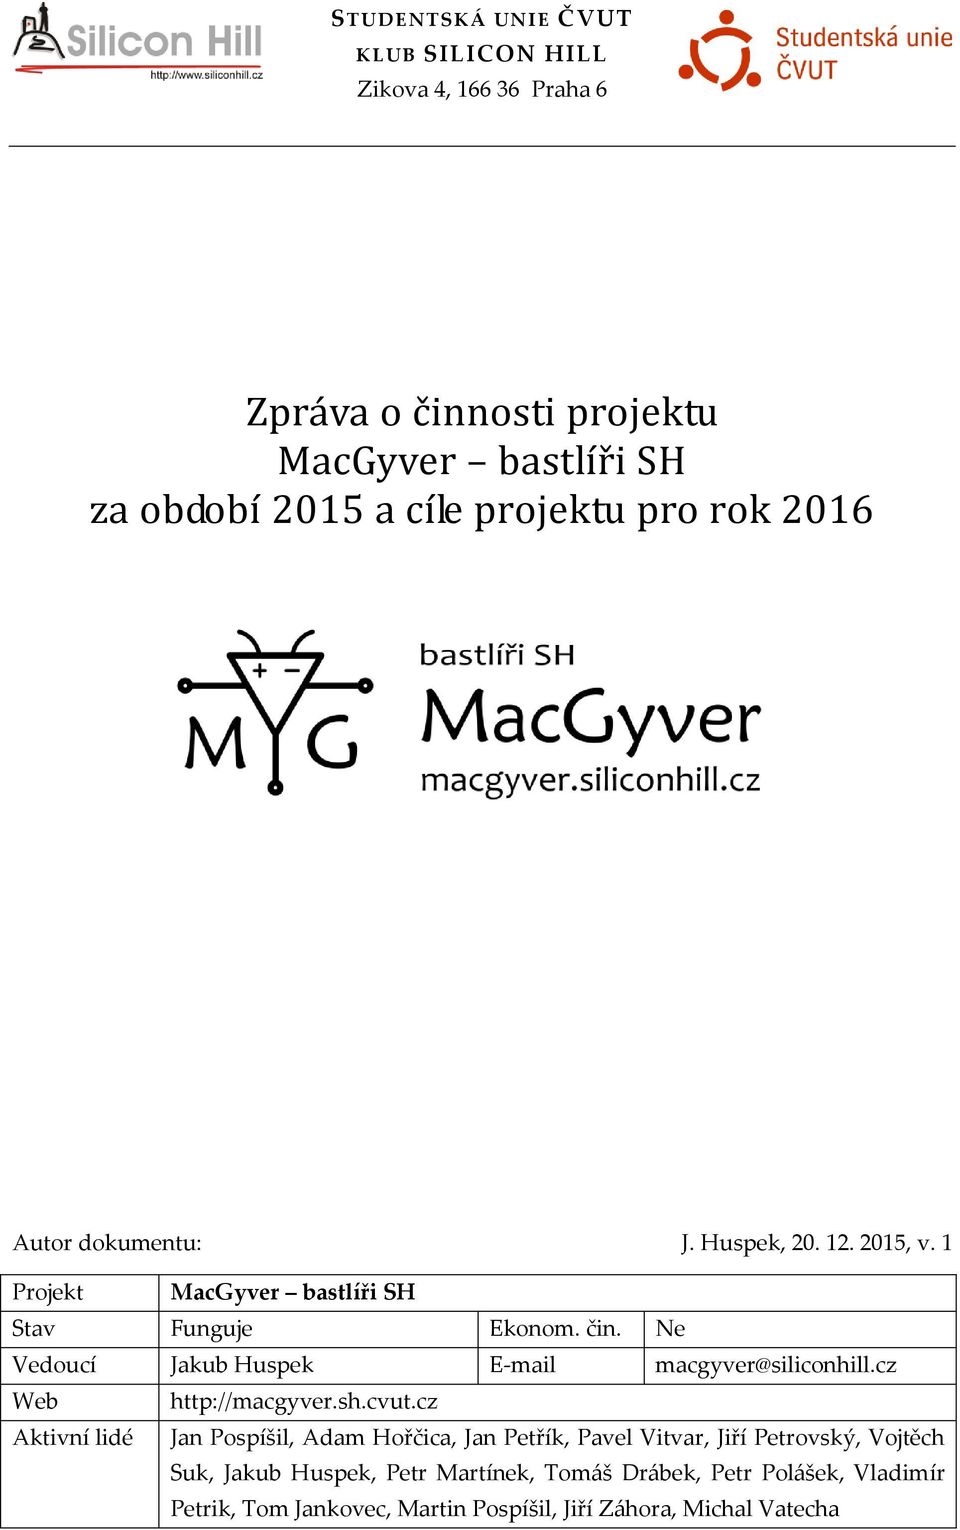 Ne Vedoucí Jakub Huspek E-mail macgyver@siliconhill.cz Web http://macgyver.sh.cvut.